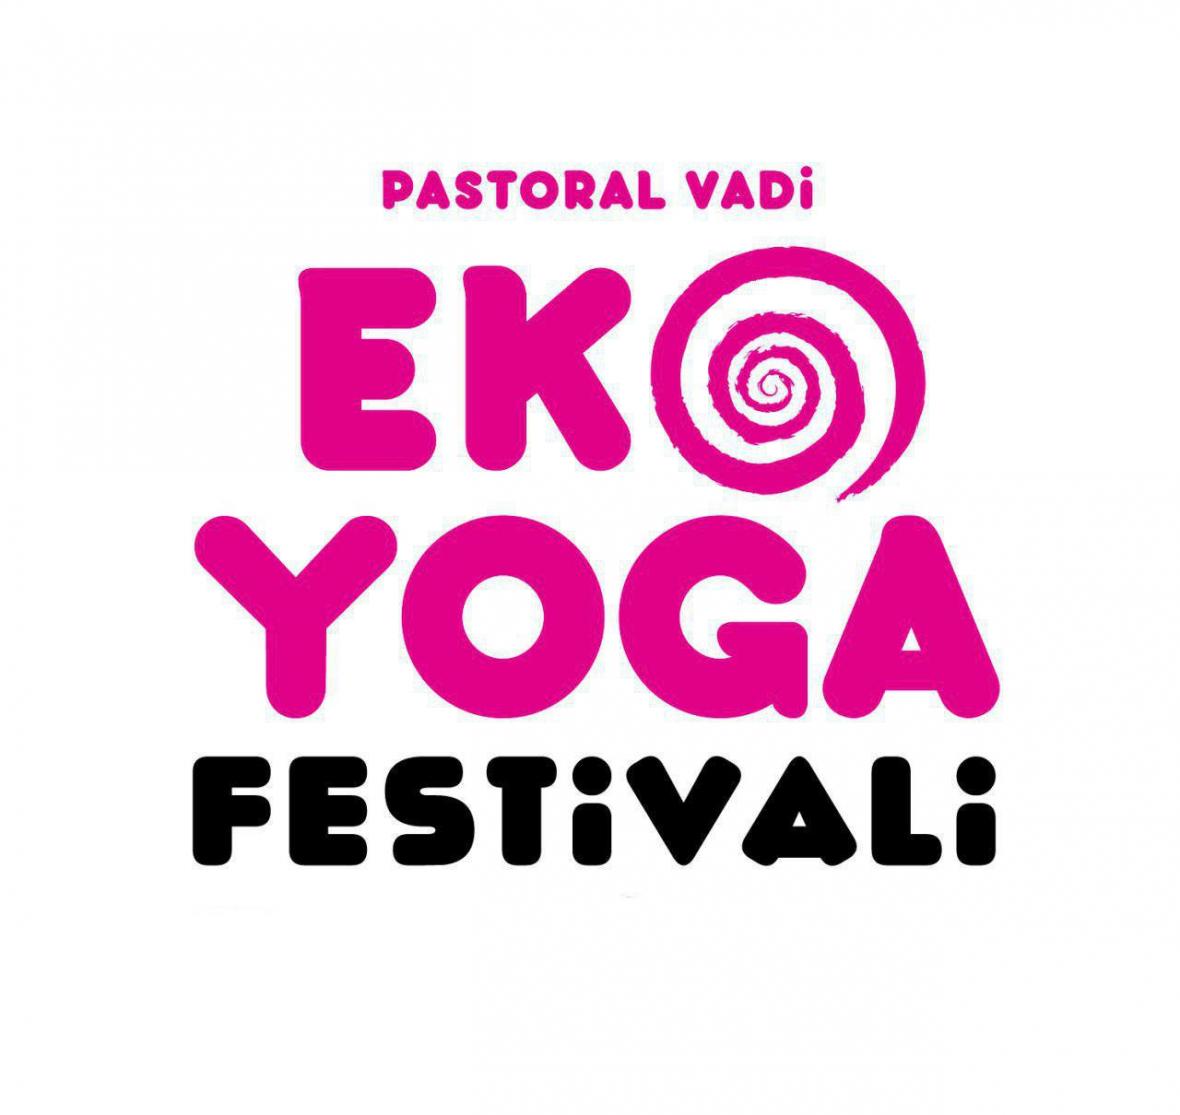 Pastoral Vadi 2. Eko-Yoga Festivali